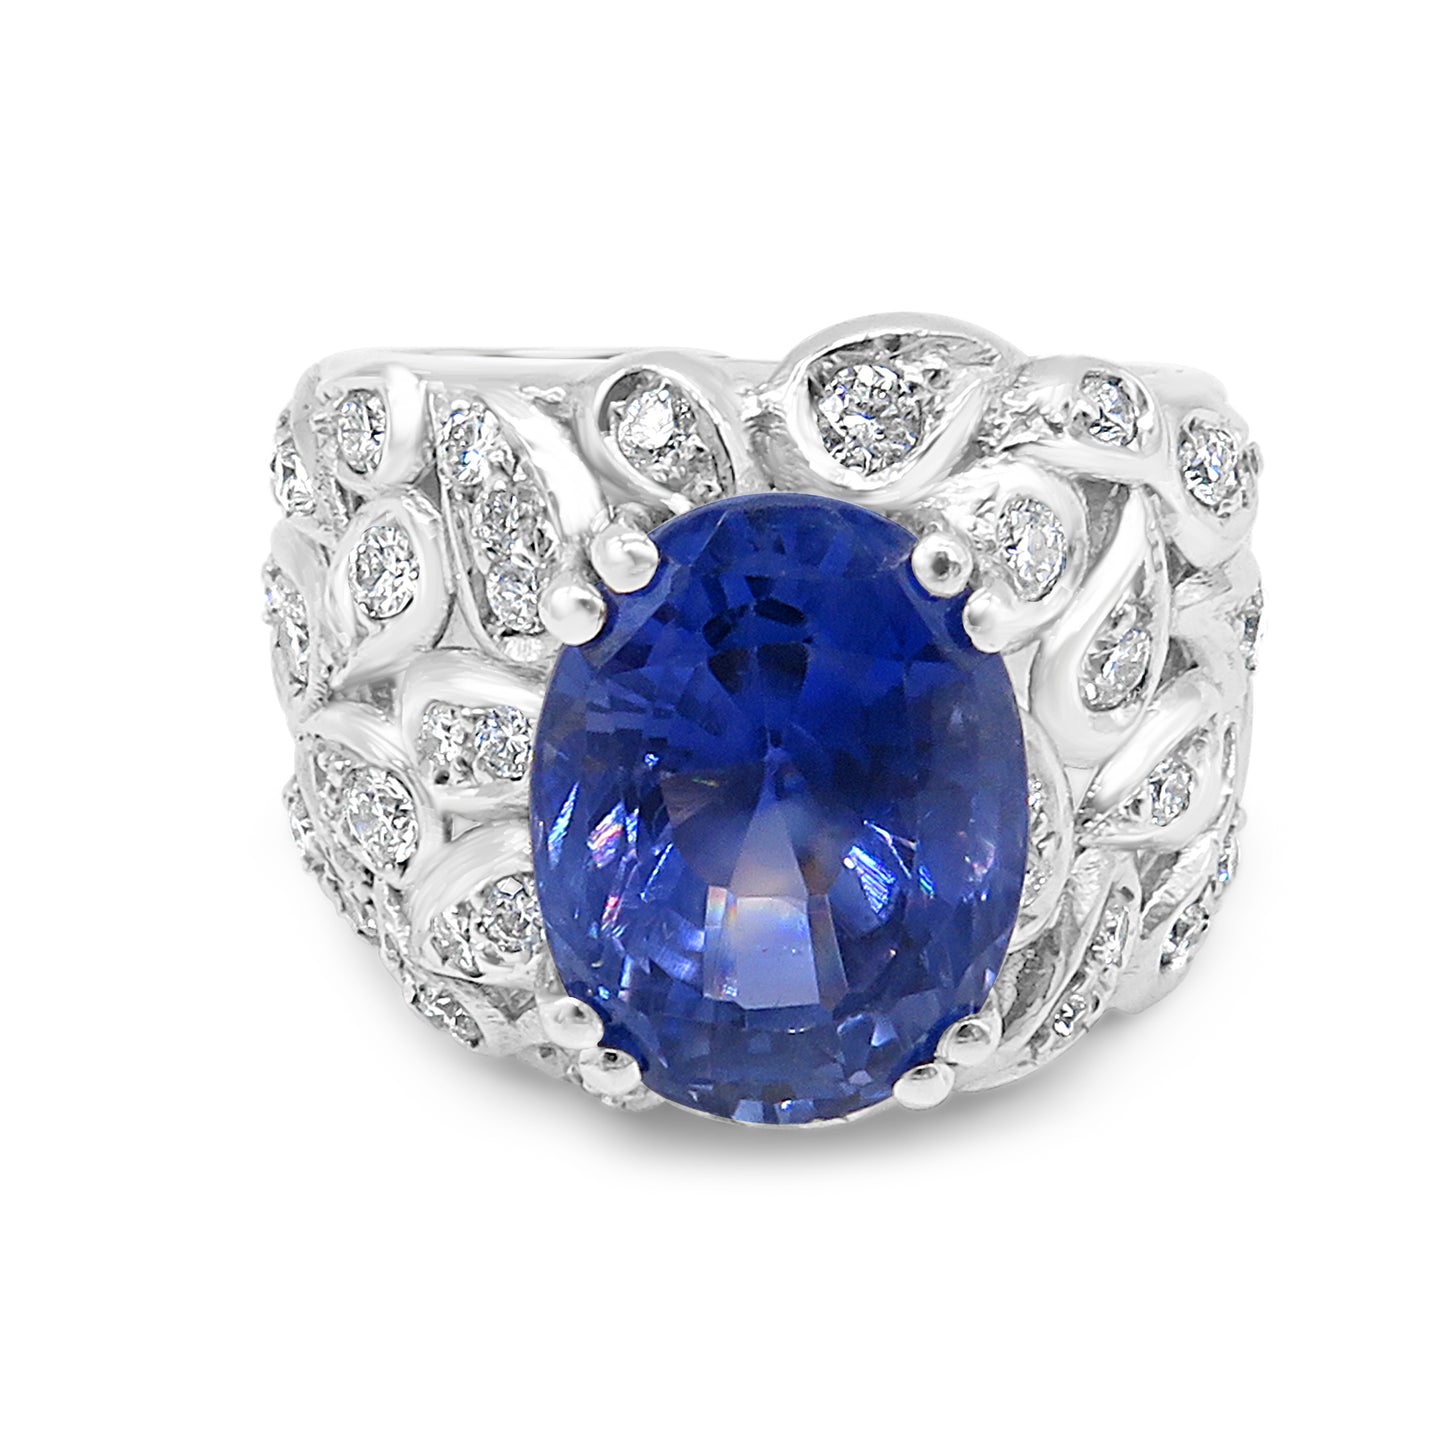 Sapphire and Diamond Ring